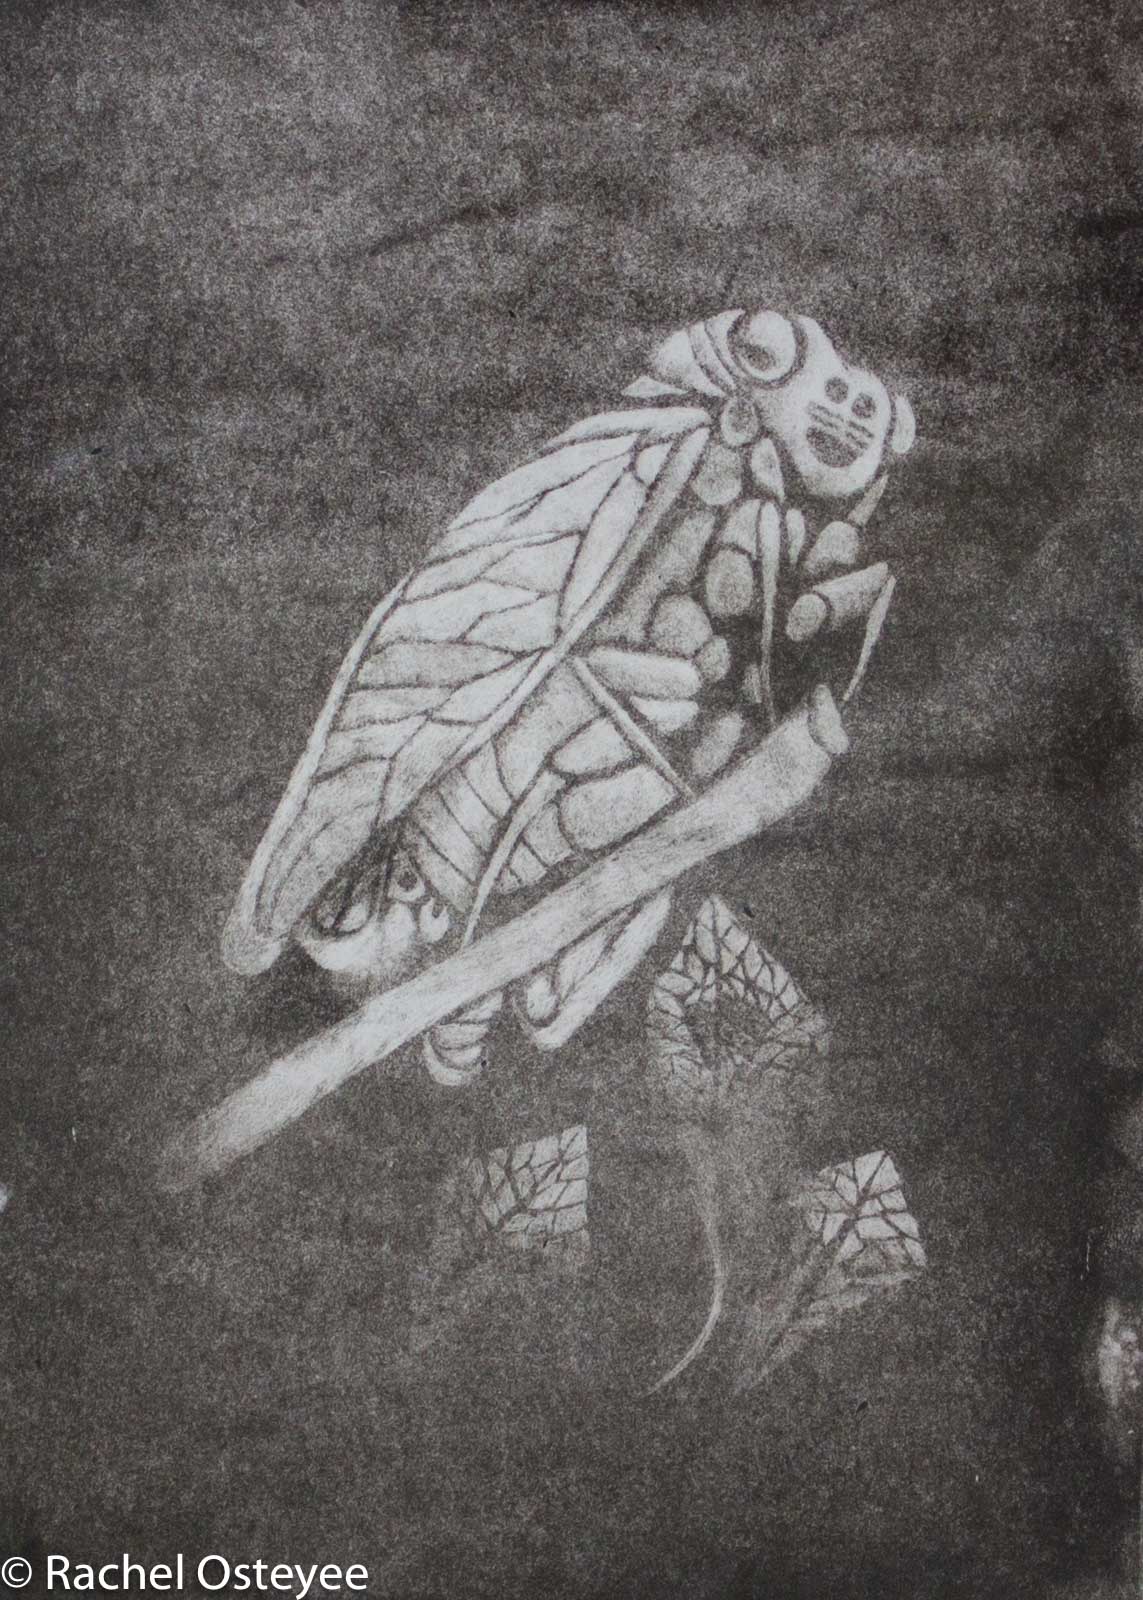 Cicada (6.5" x 9", Mezzotint)